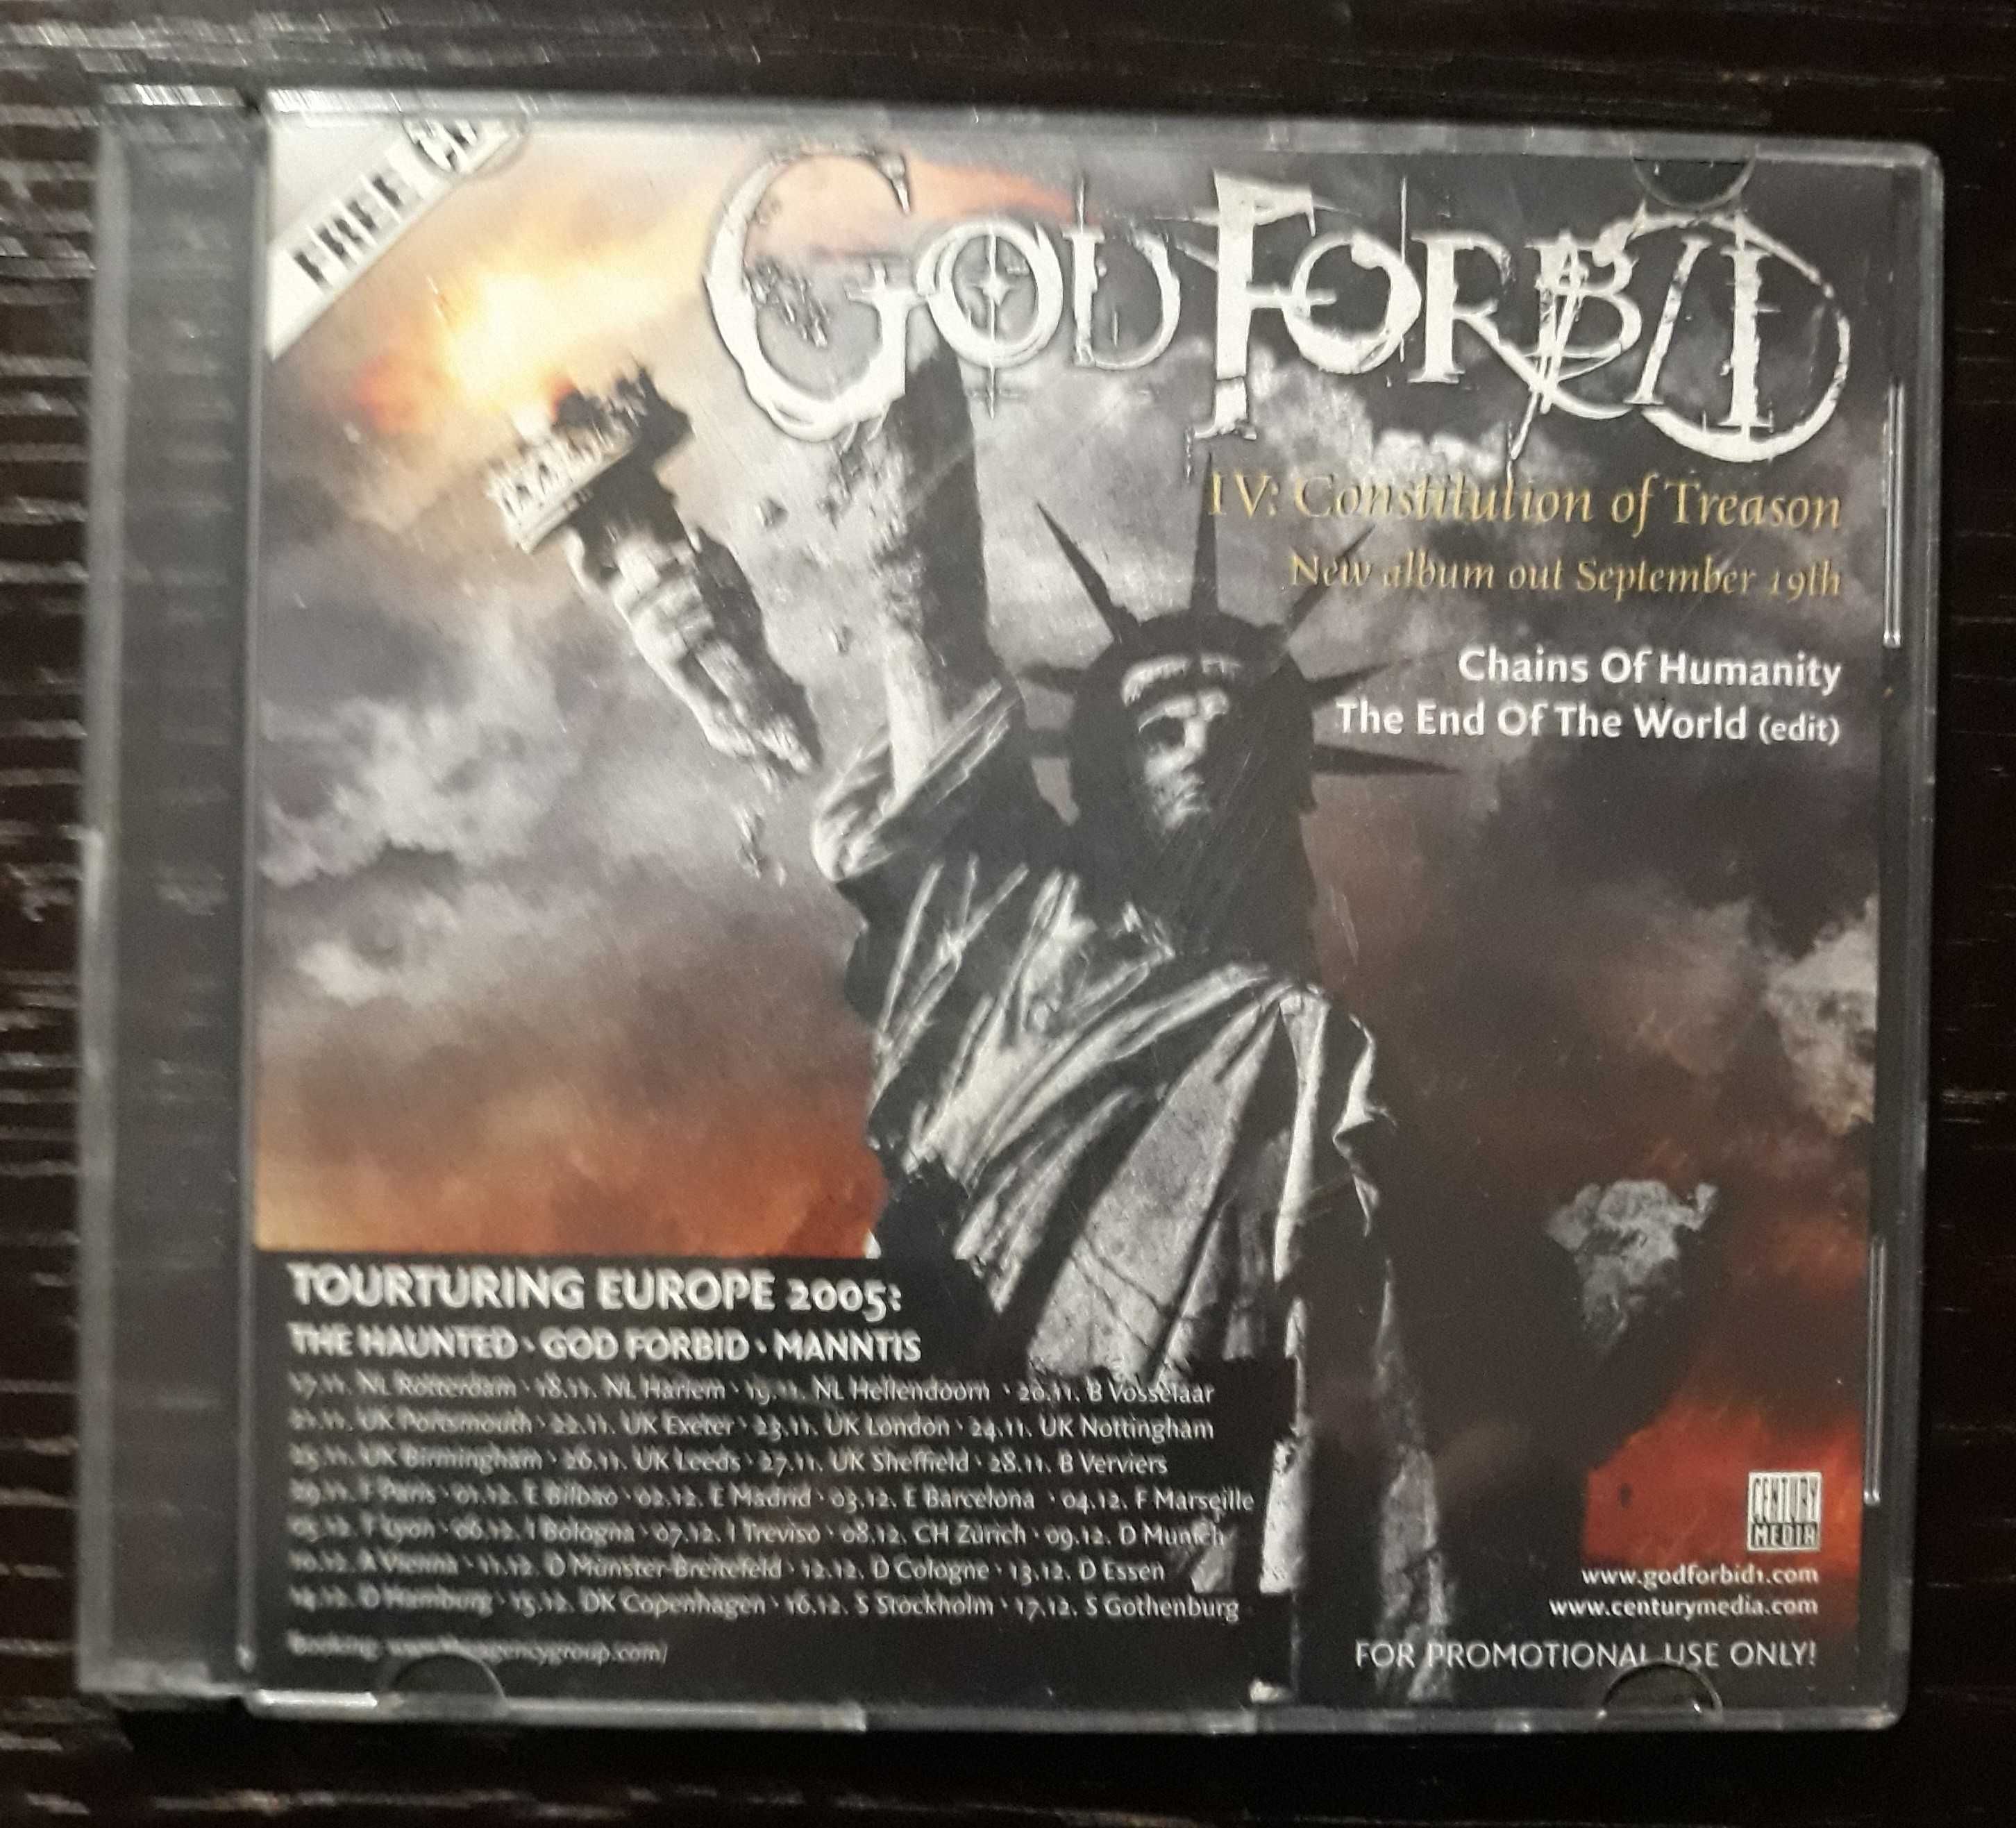 Maigra, Century Media, Metal Hammer  - płyty CD (Metal)